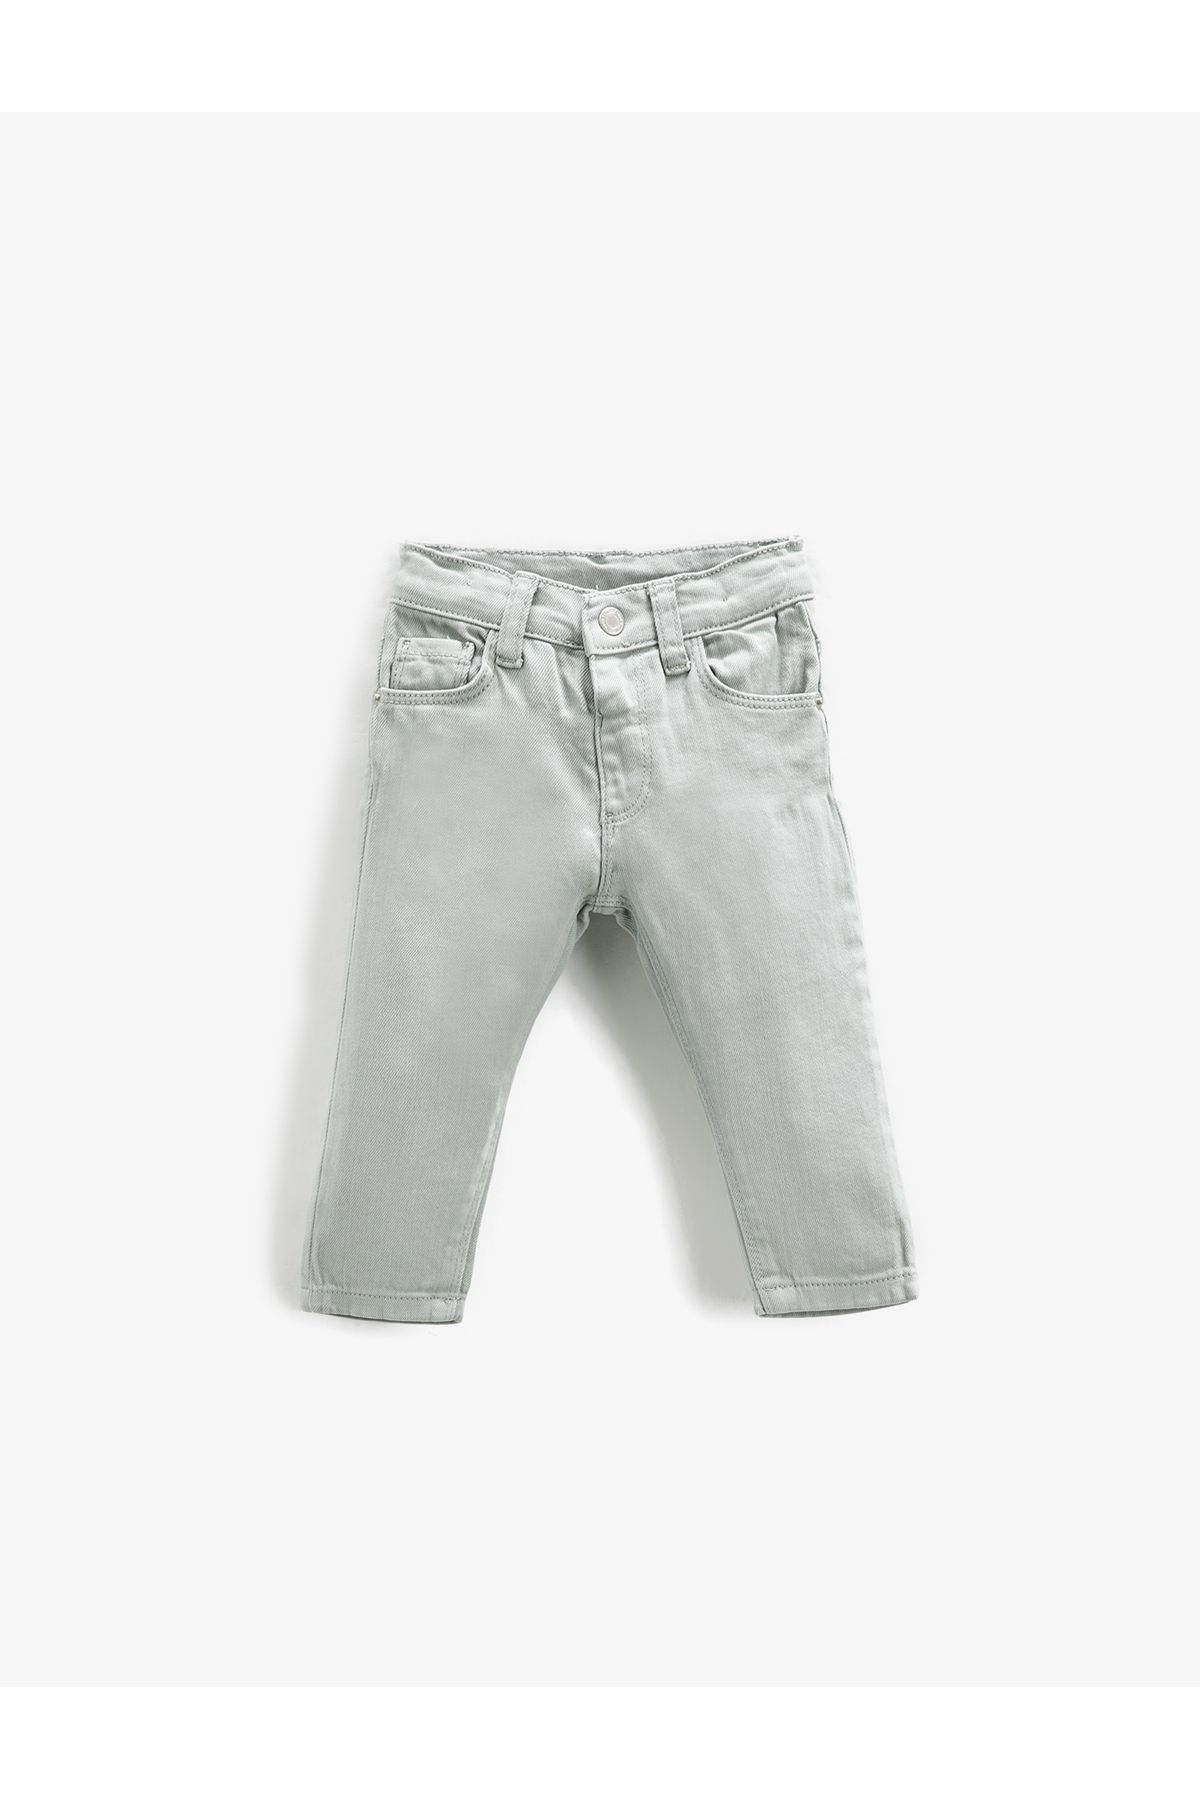 Koton Kot Pantolon Slim Fit Cepli Pamuklu Beli Ayarlanabilir Lastikli